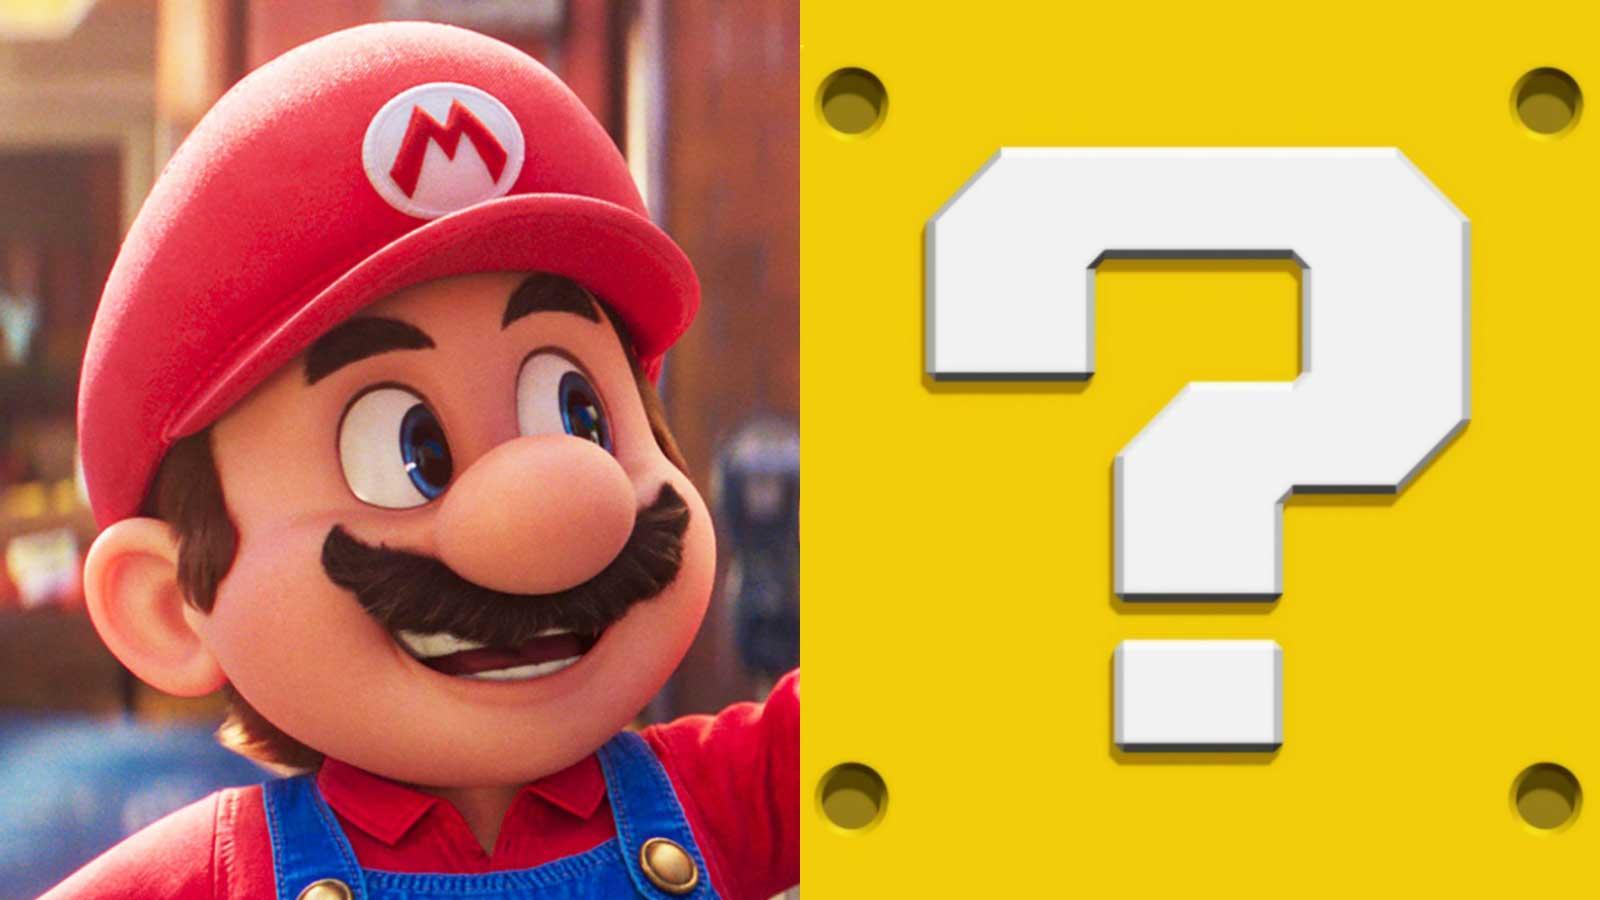 Mario looking at Question box from Mario